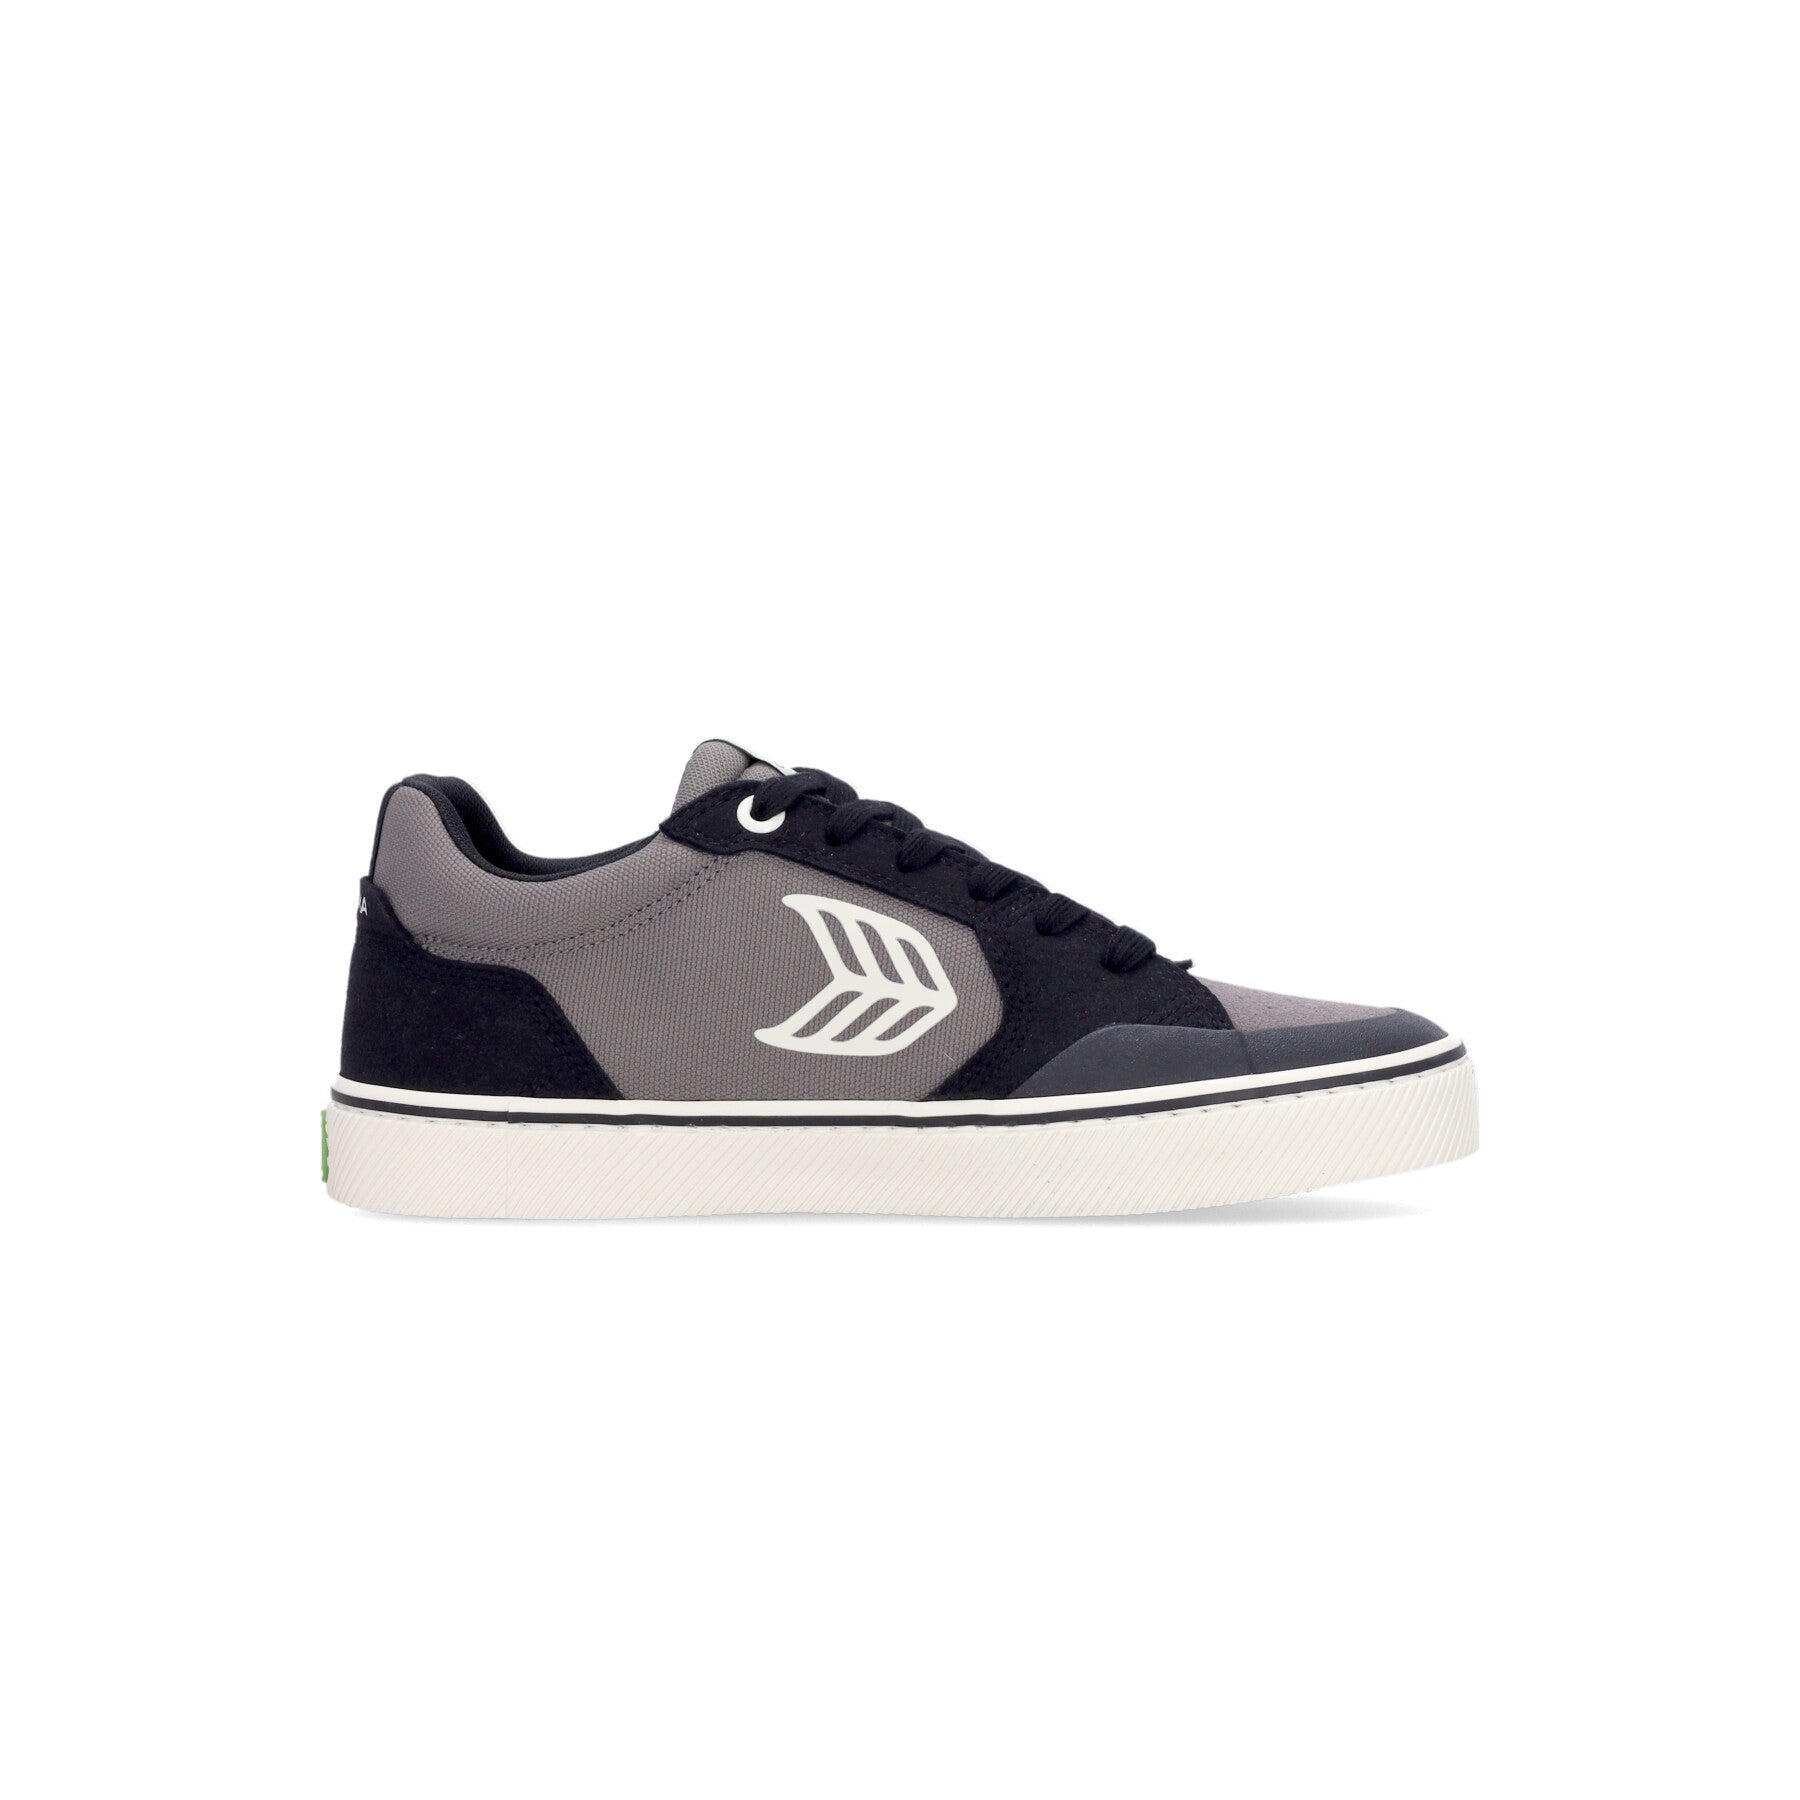 Vallely Men's Skate Shoes Black/charcoal Grey